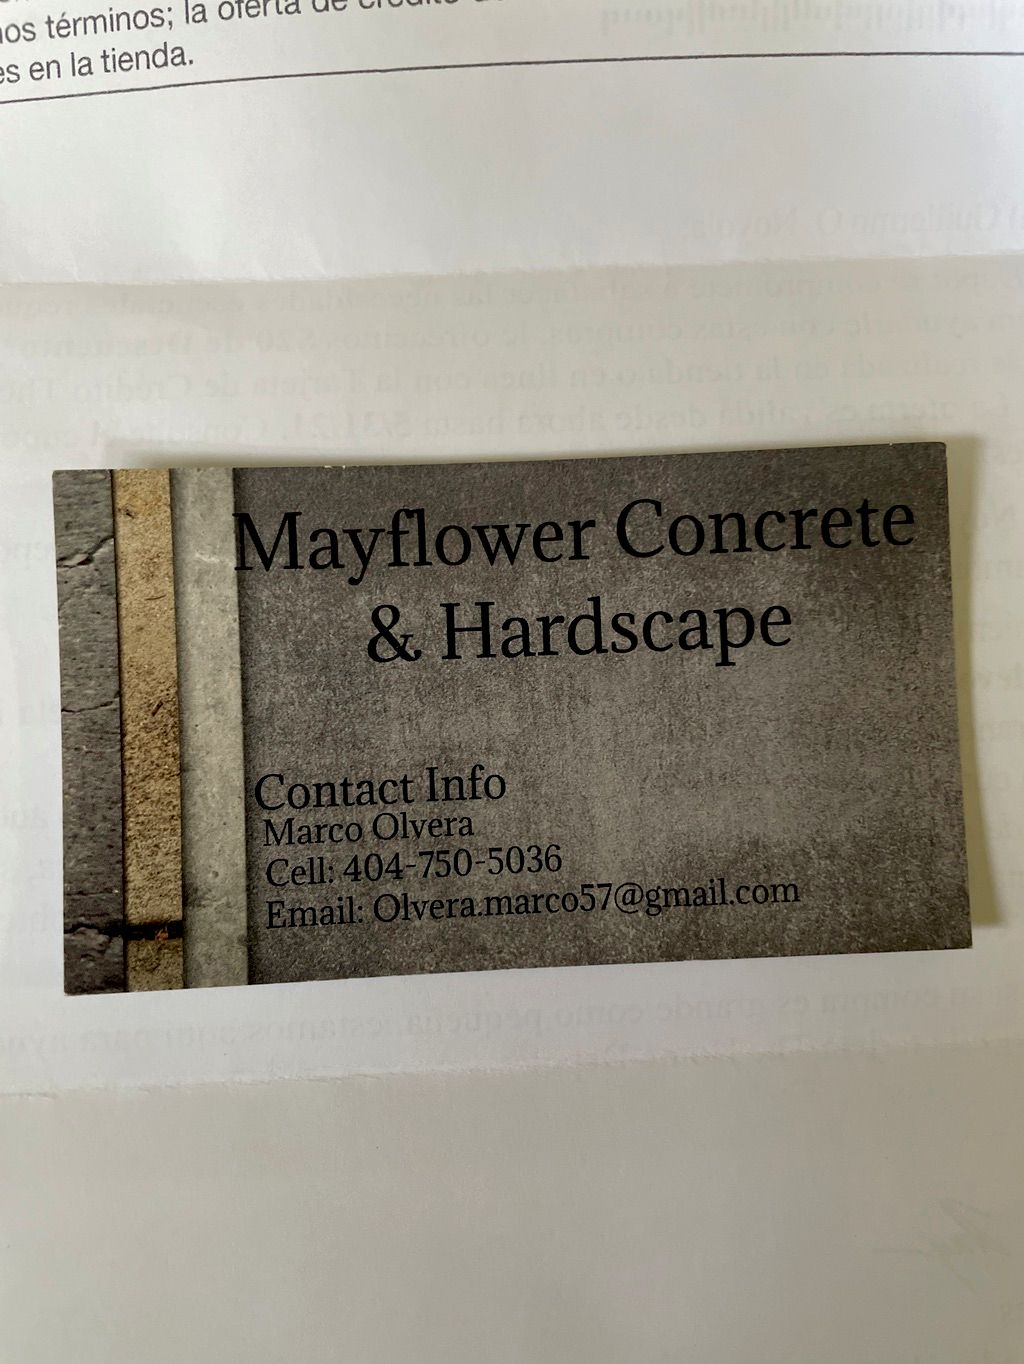 Mayflower Concrete & hardscape llc